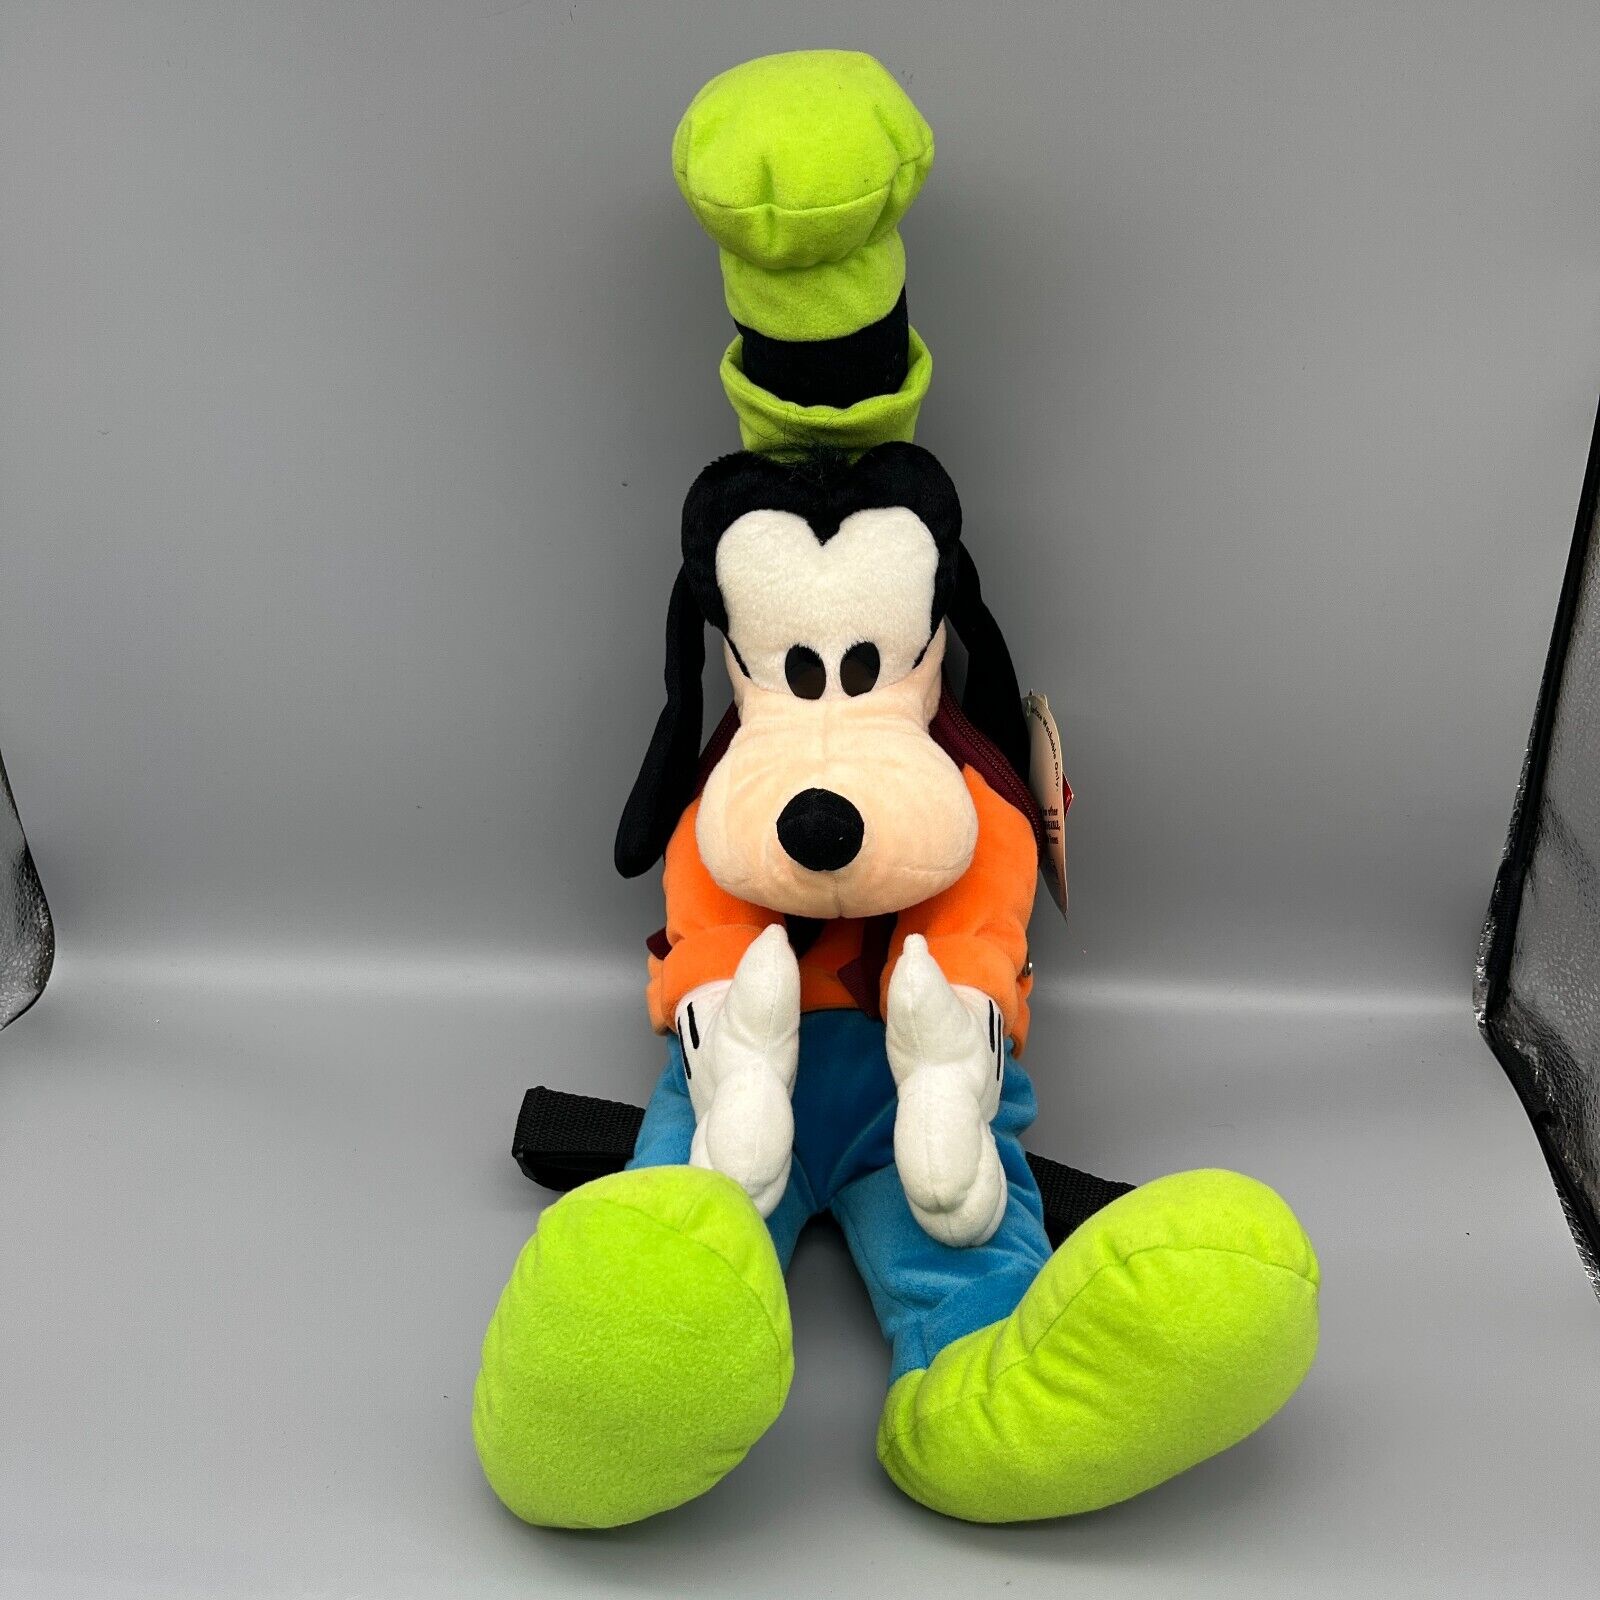 Goofy Plush Huggable Wearable Disney Vintage 1990s Mickeys for Kids Stuff